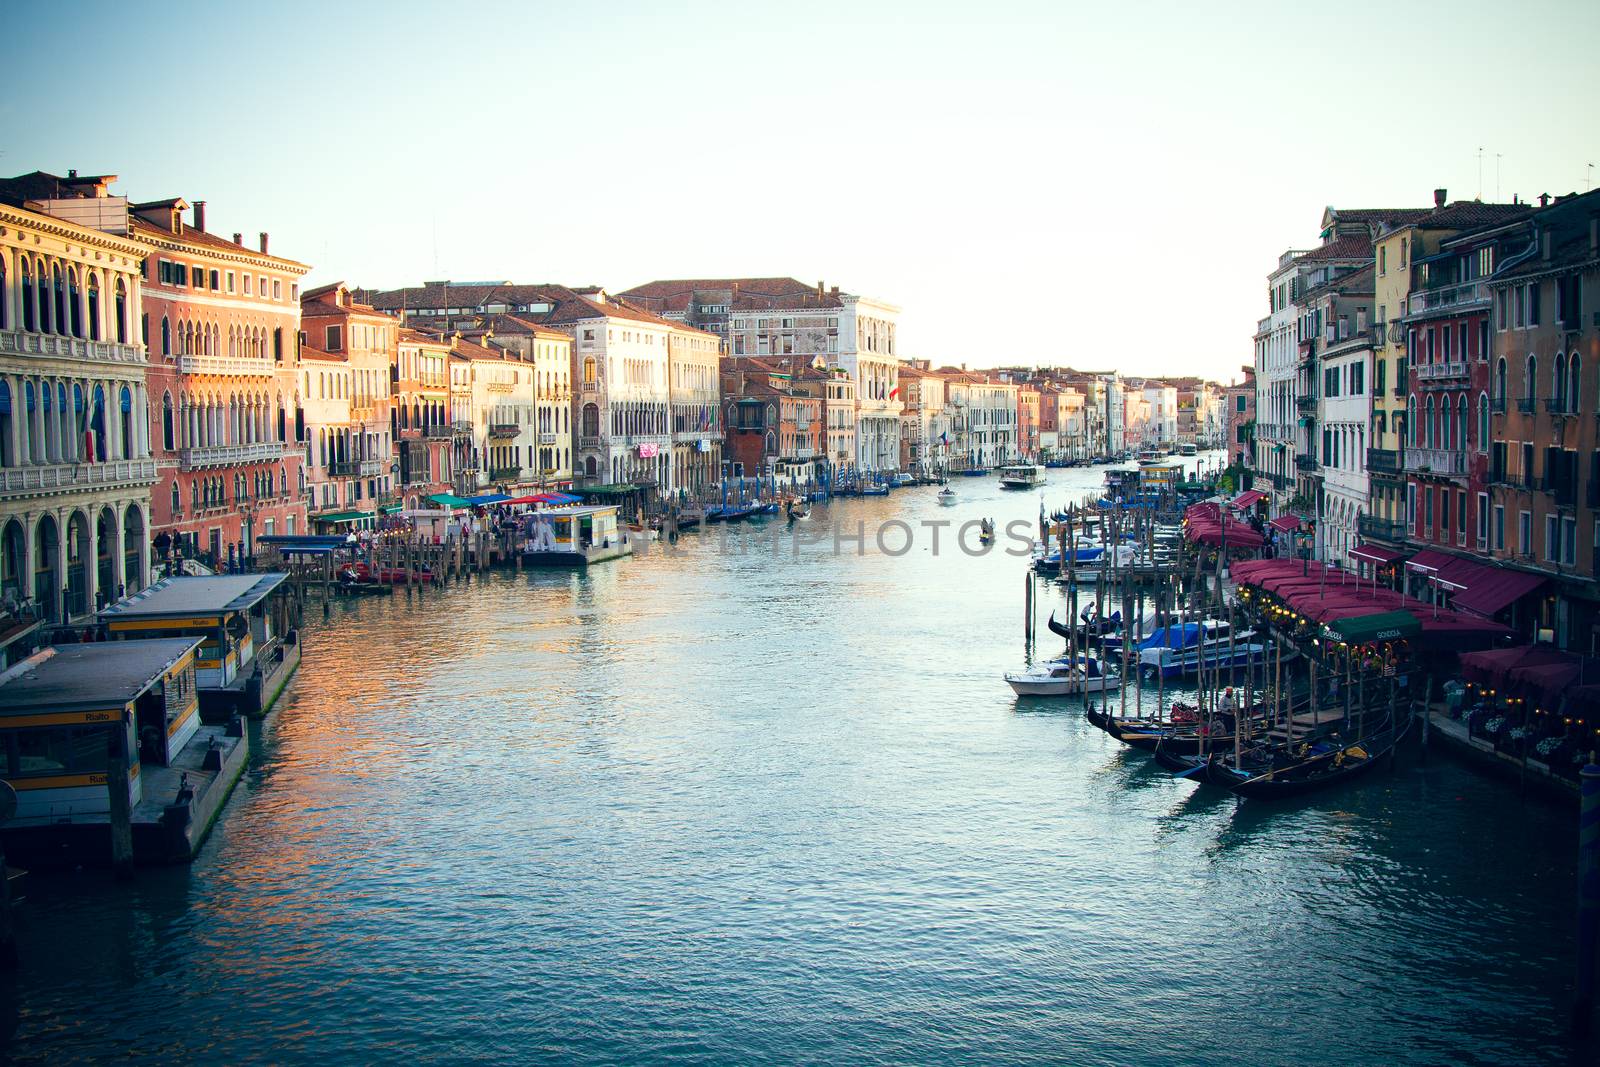 Venice Canal and Gondola by samULvisuals